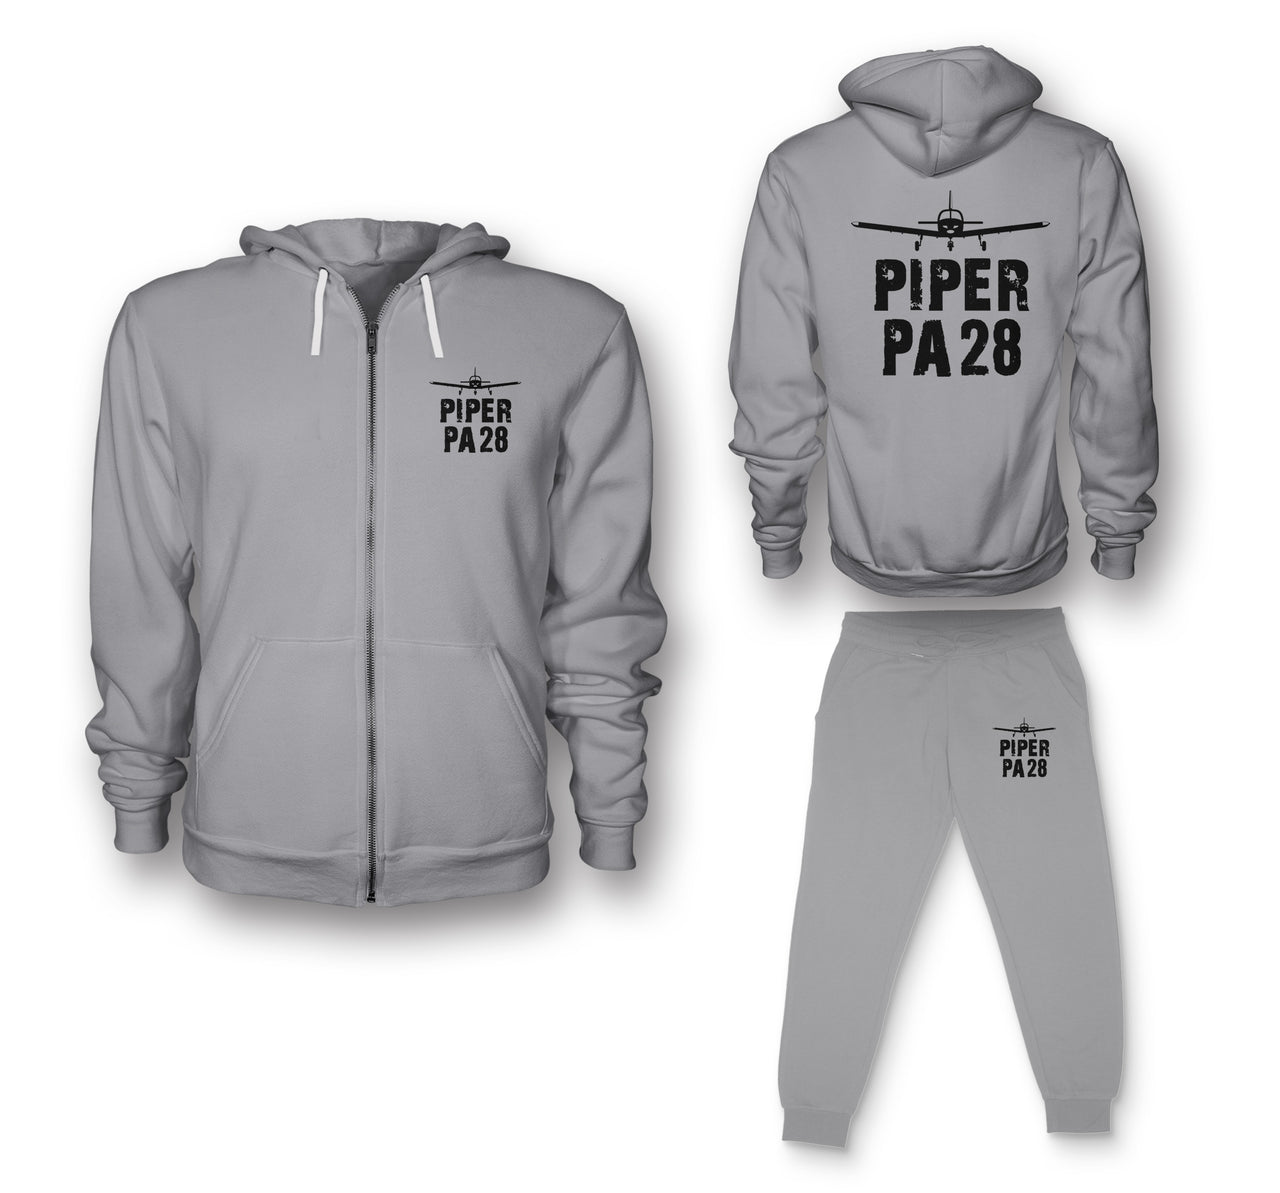 Piper PA28 & Plane Designed Zipped Hoodies & Sweatpants Set